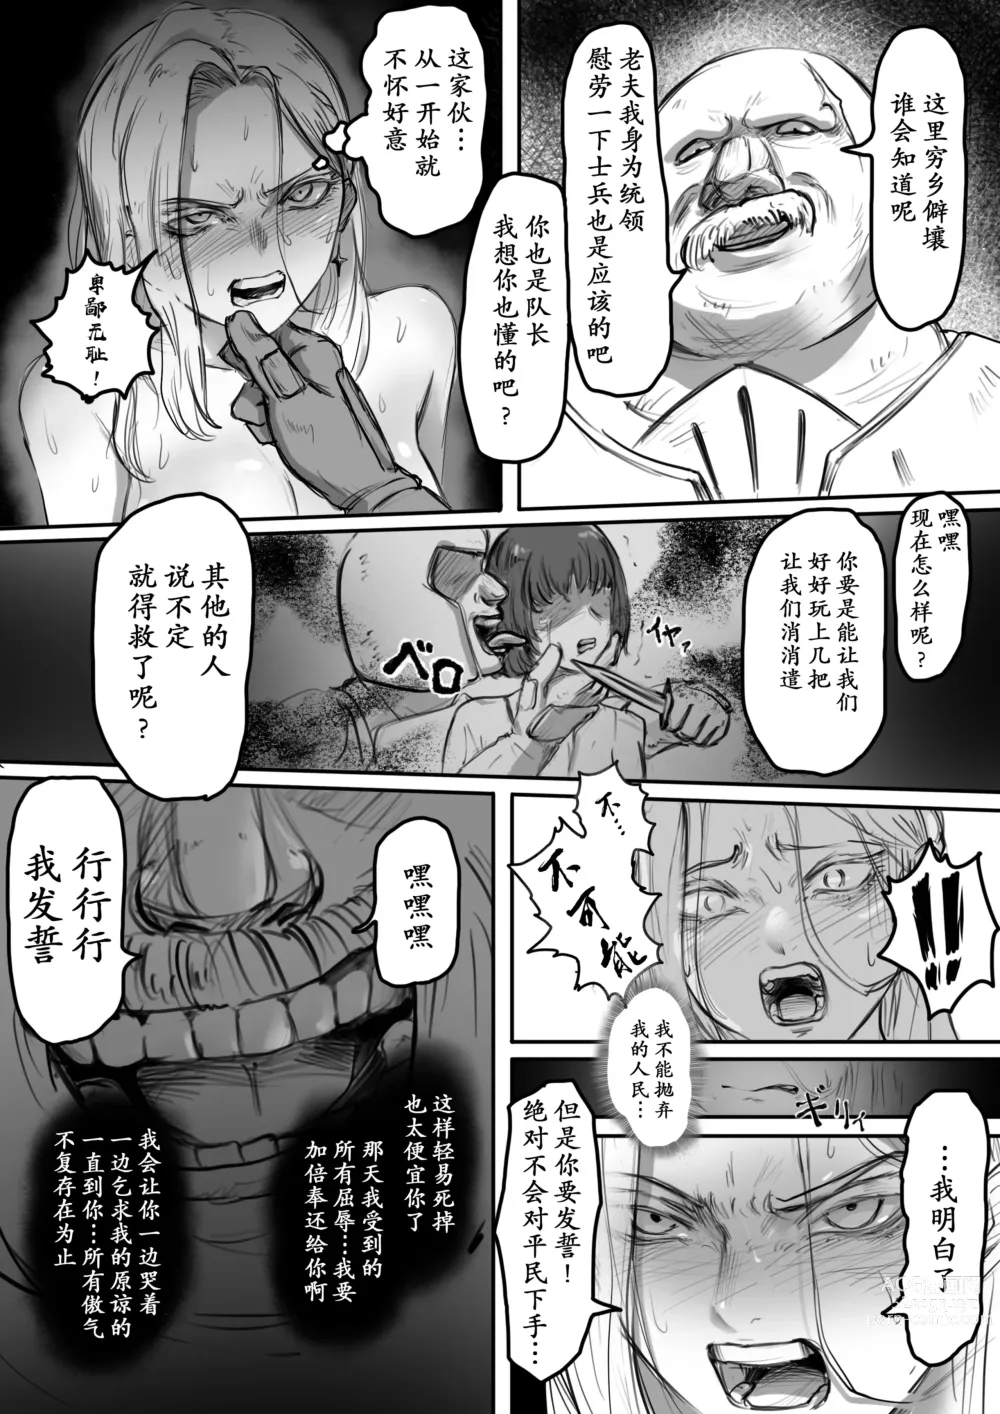 Page 7 of doujinshi 骑士的骄傲永不消逝